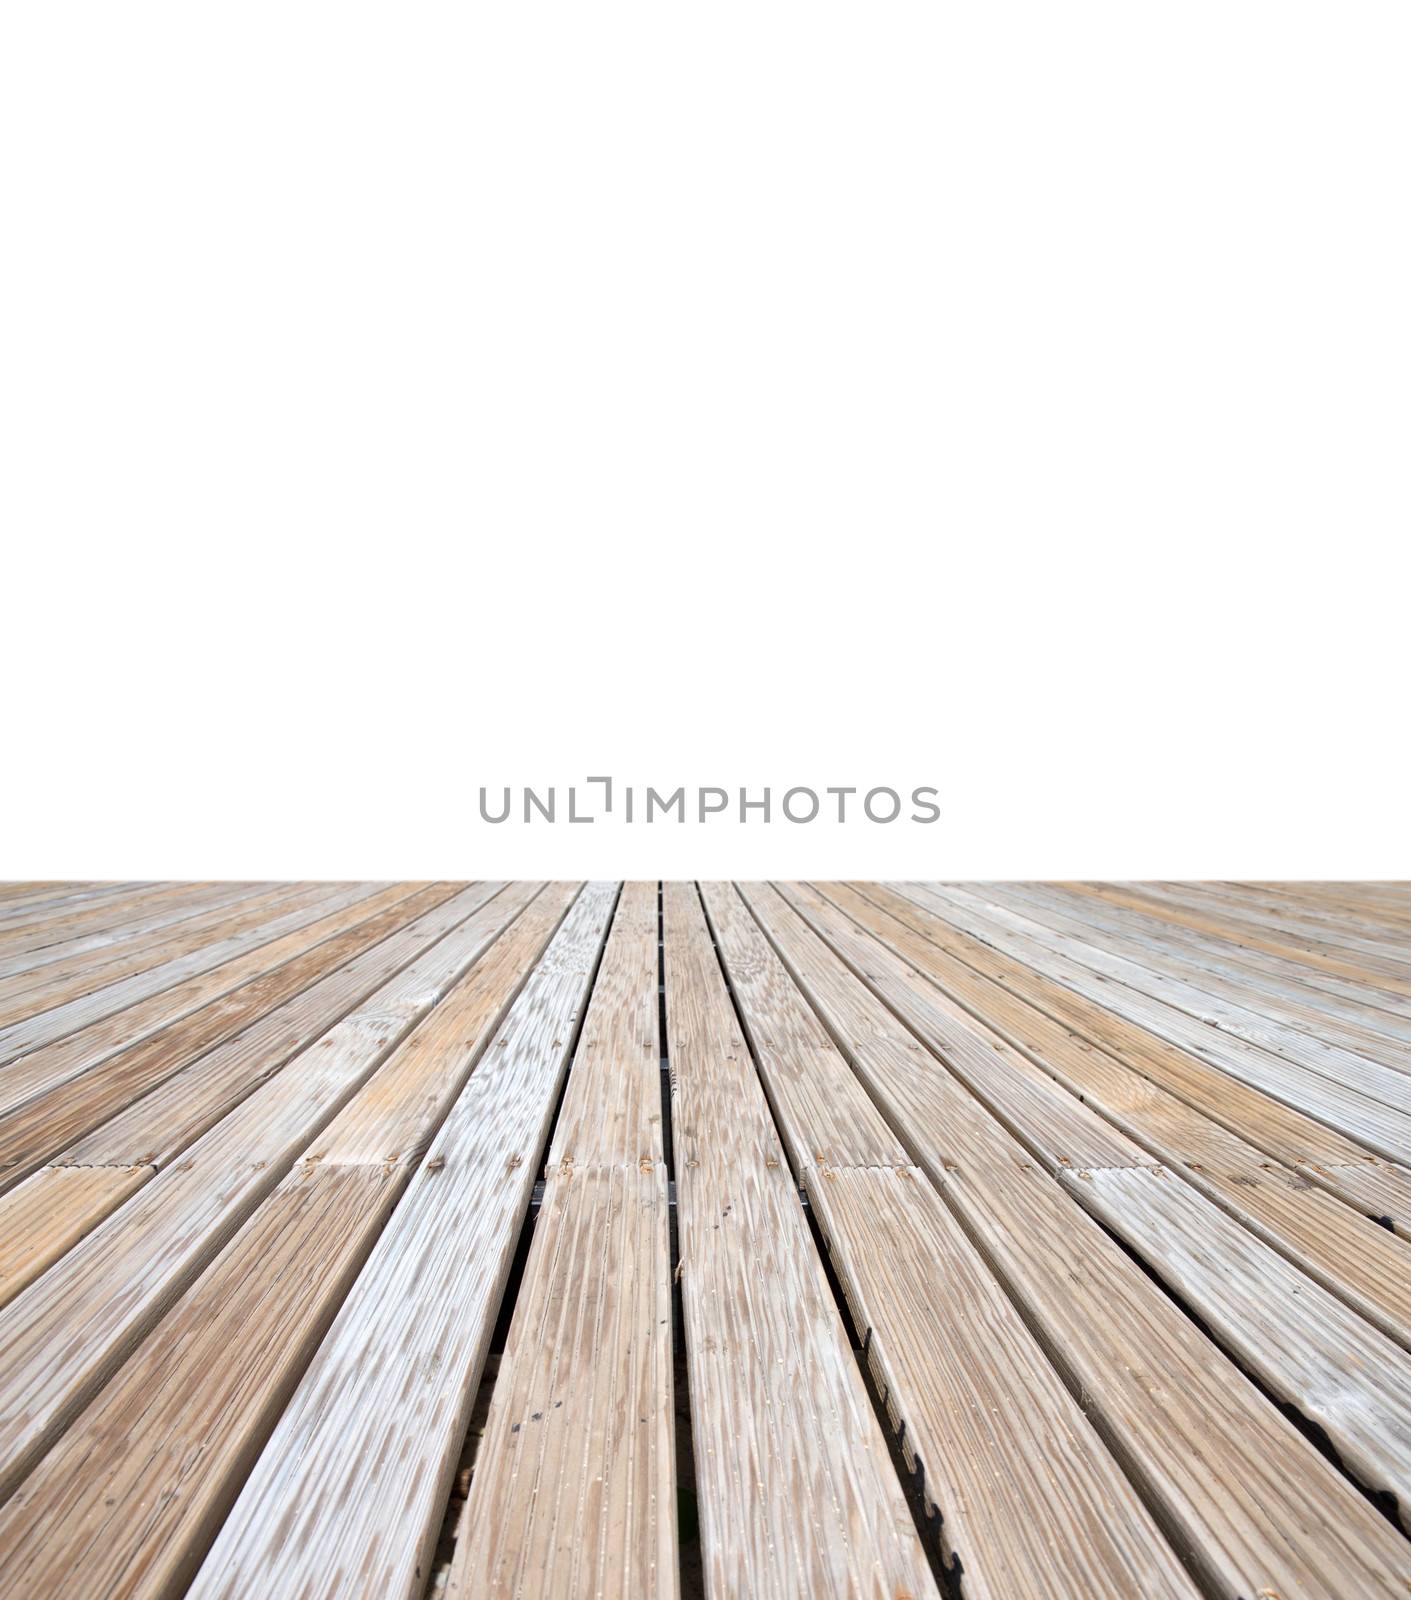 empty wooden floor isolated on white